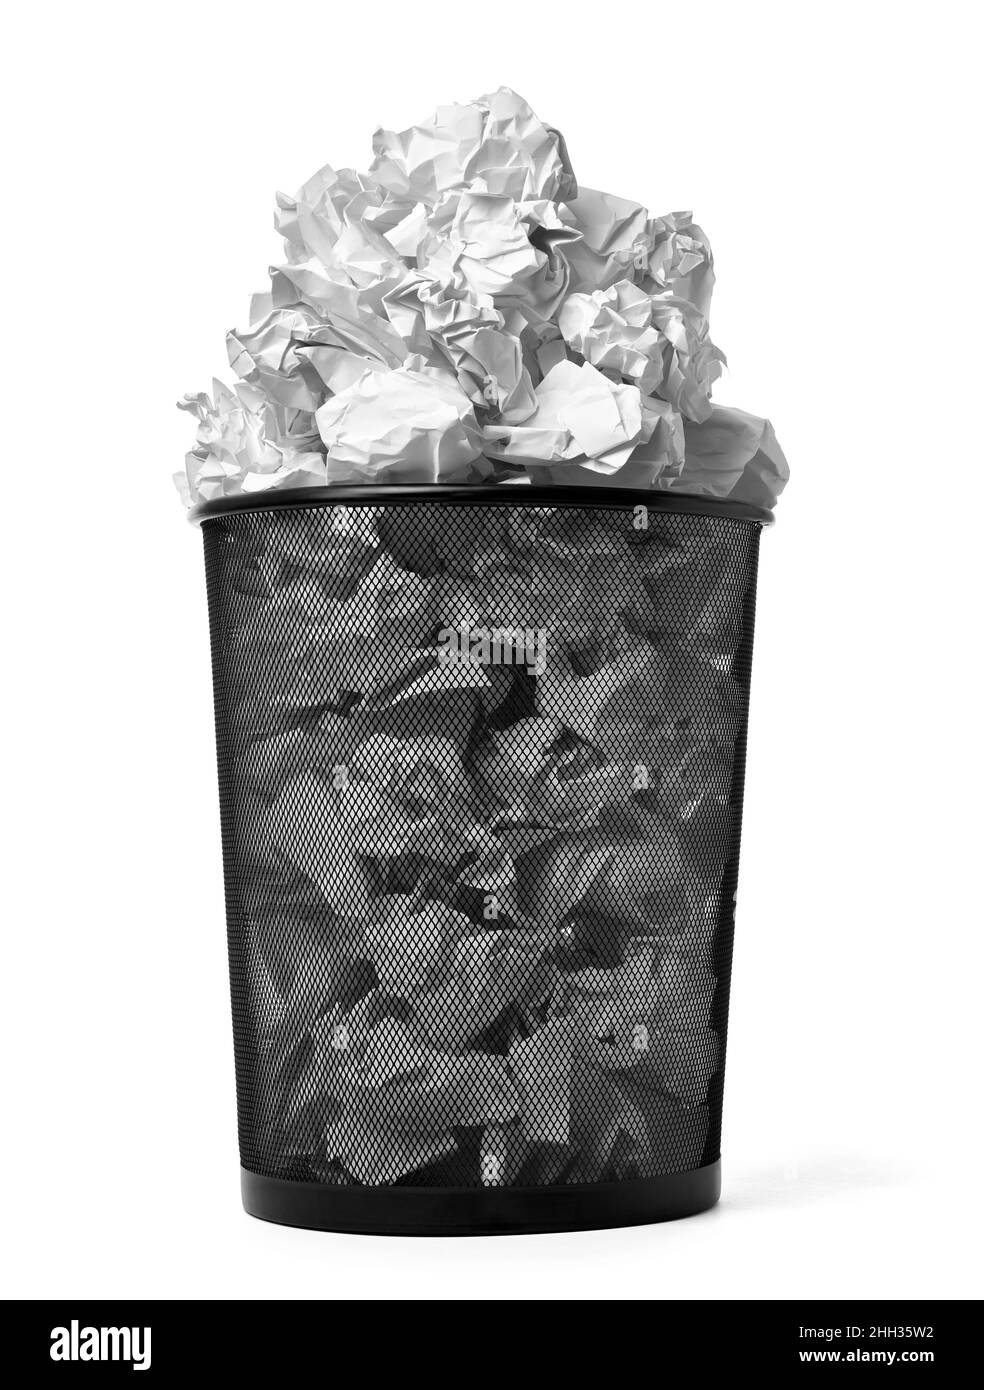 paper ball trash bin rubbish garbage wastepaper Stock Photo